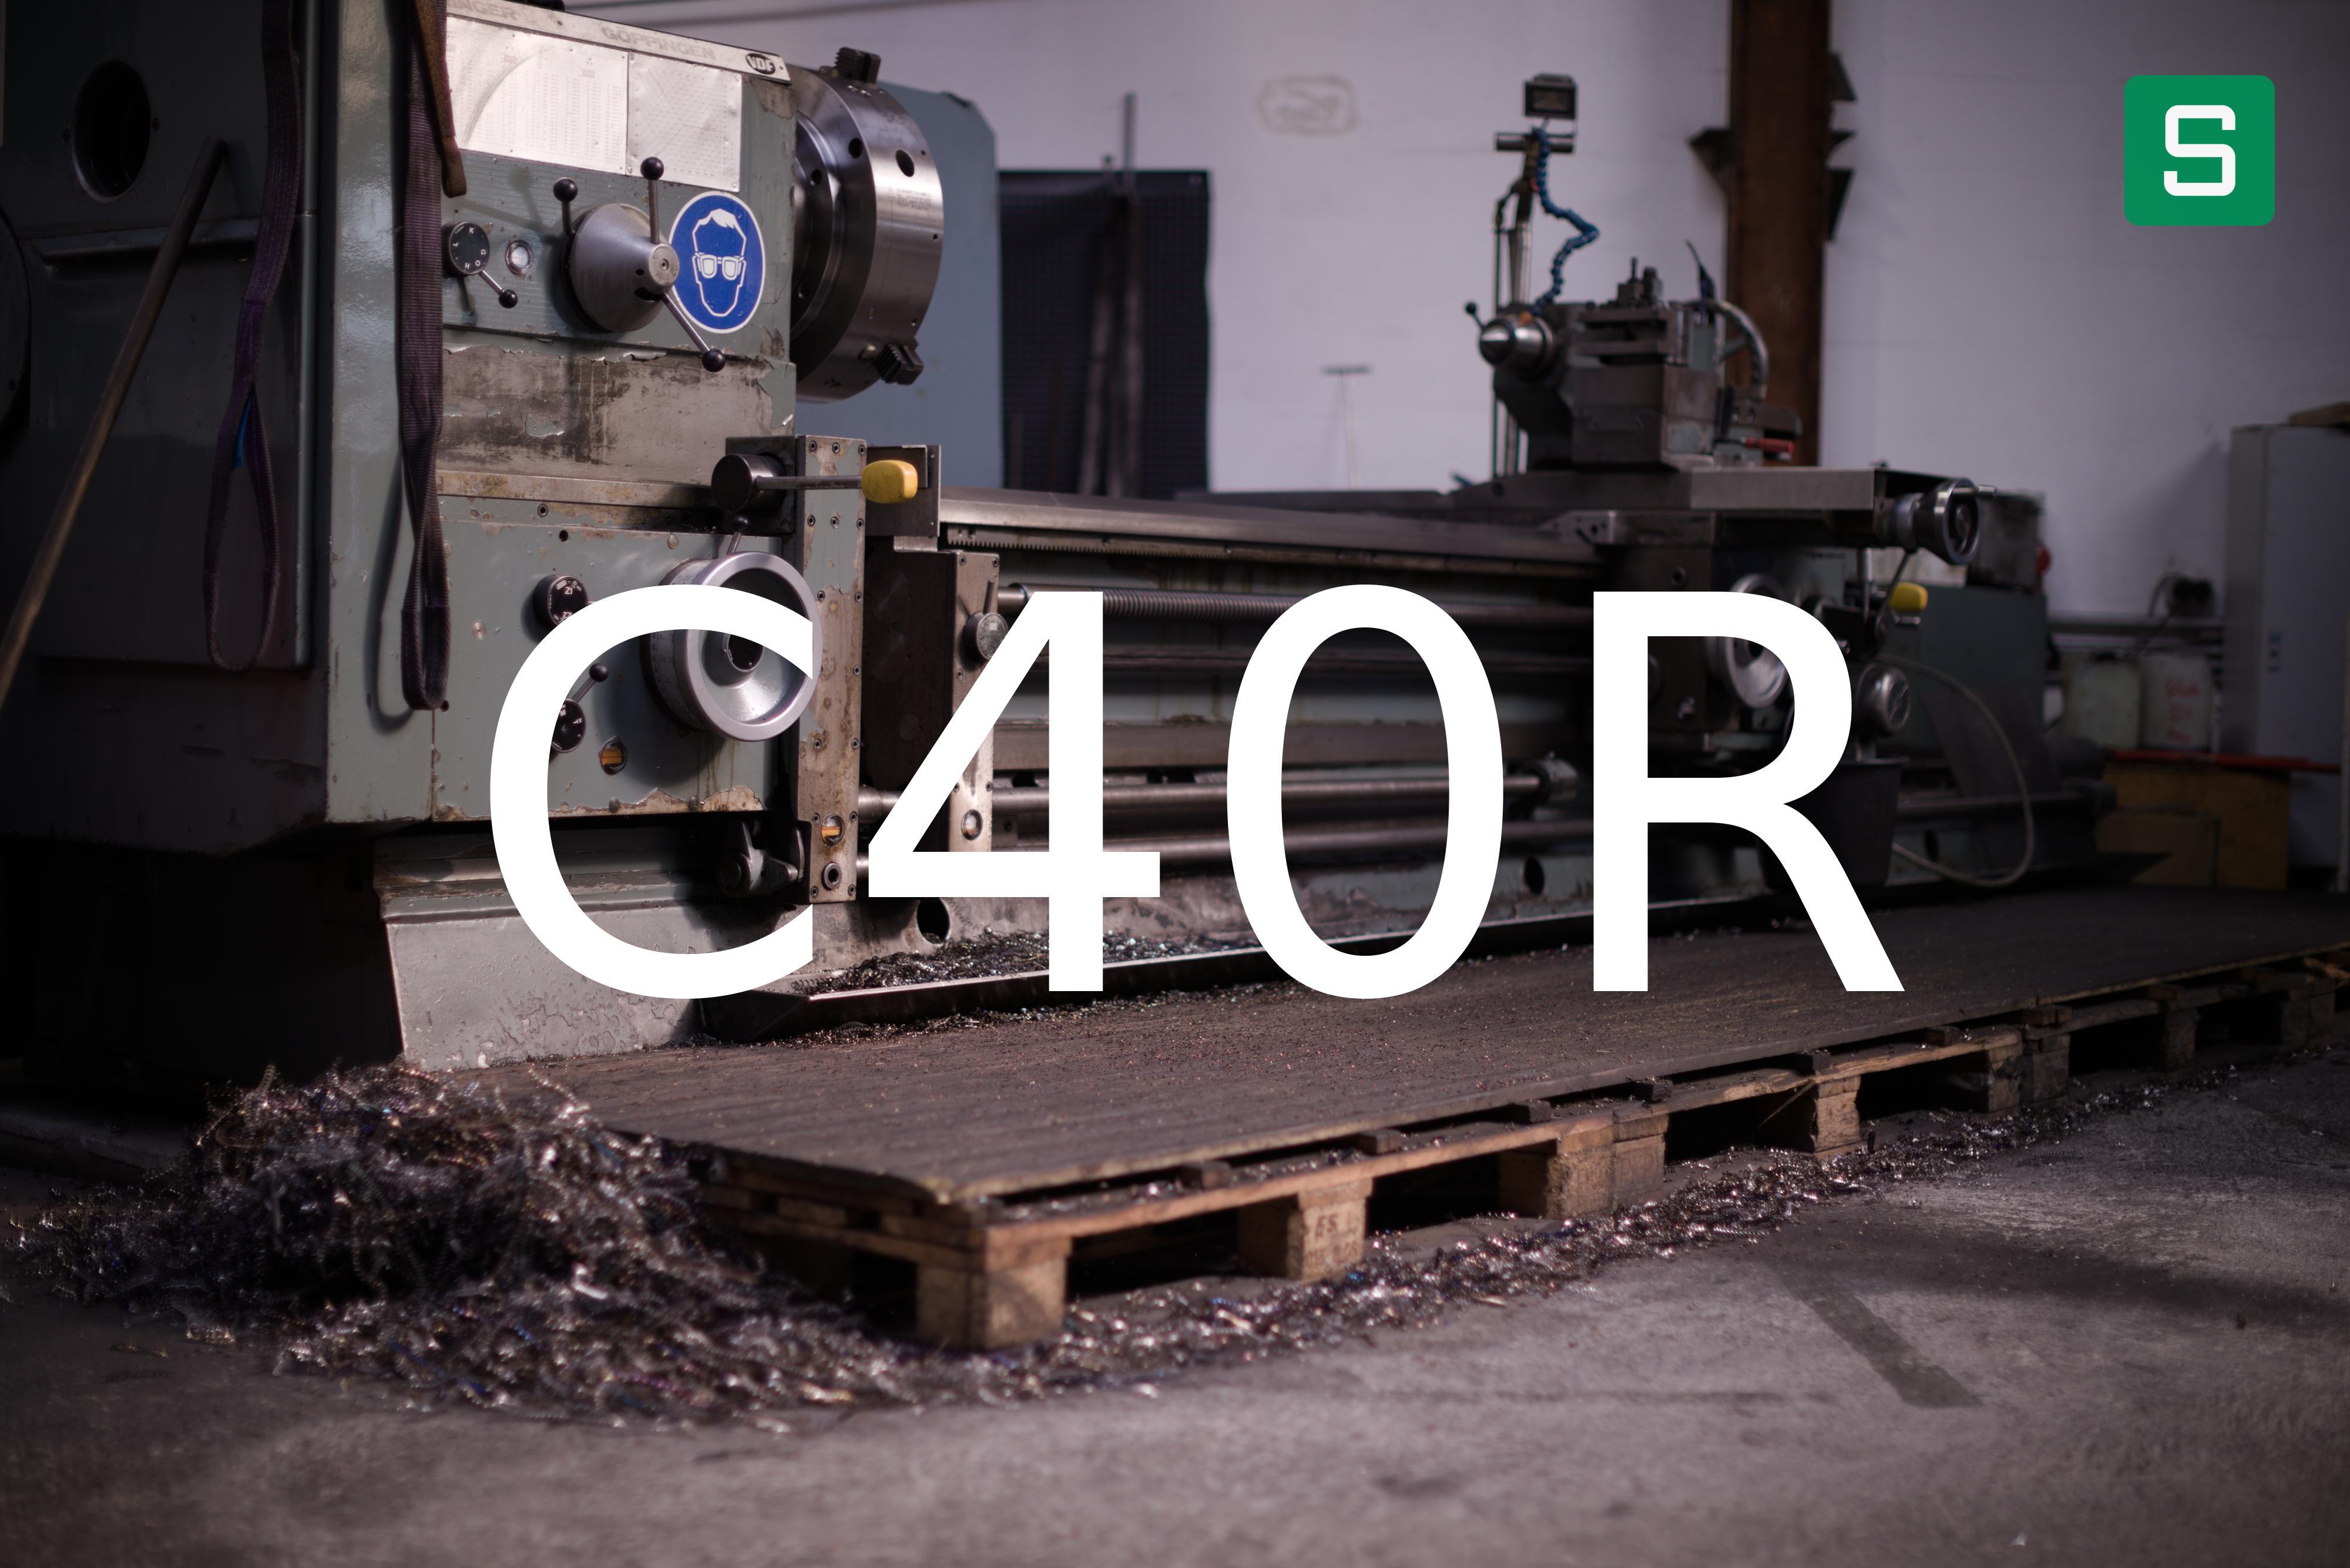 Steel Material: C40R